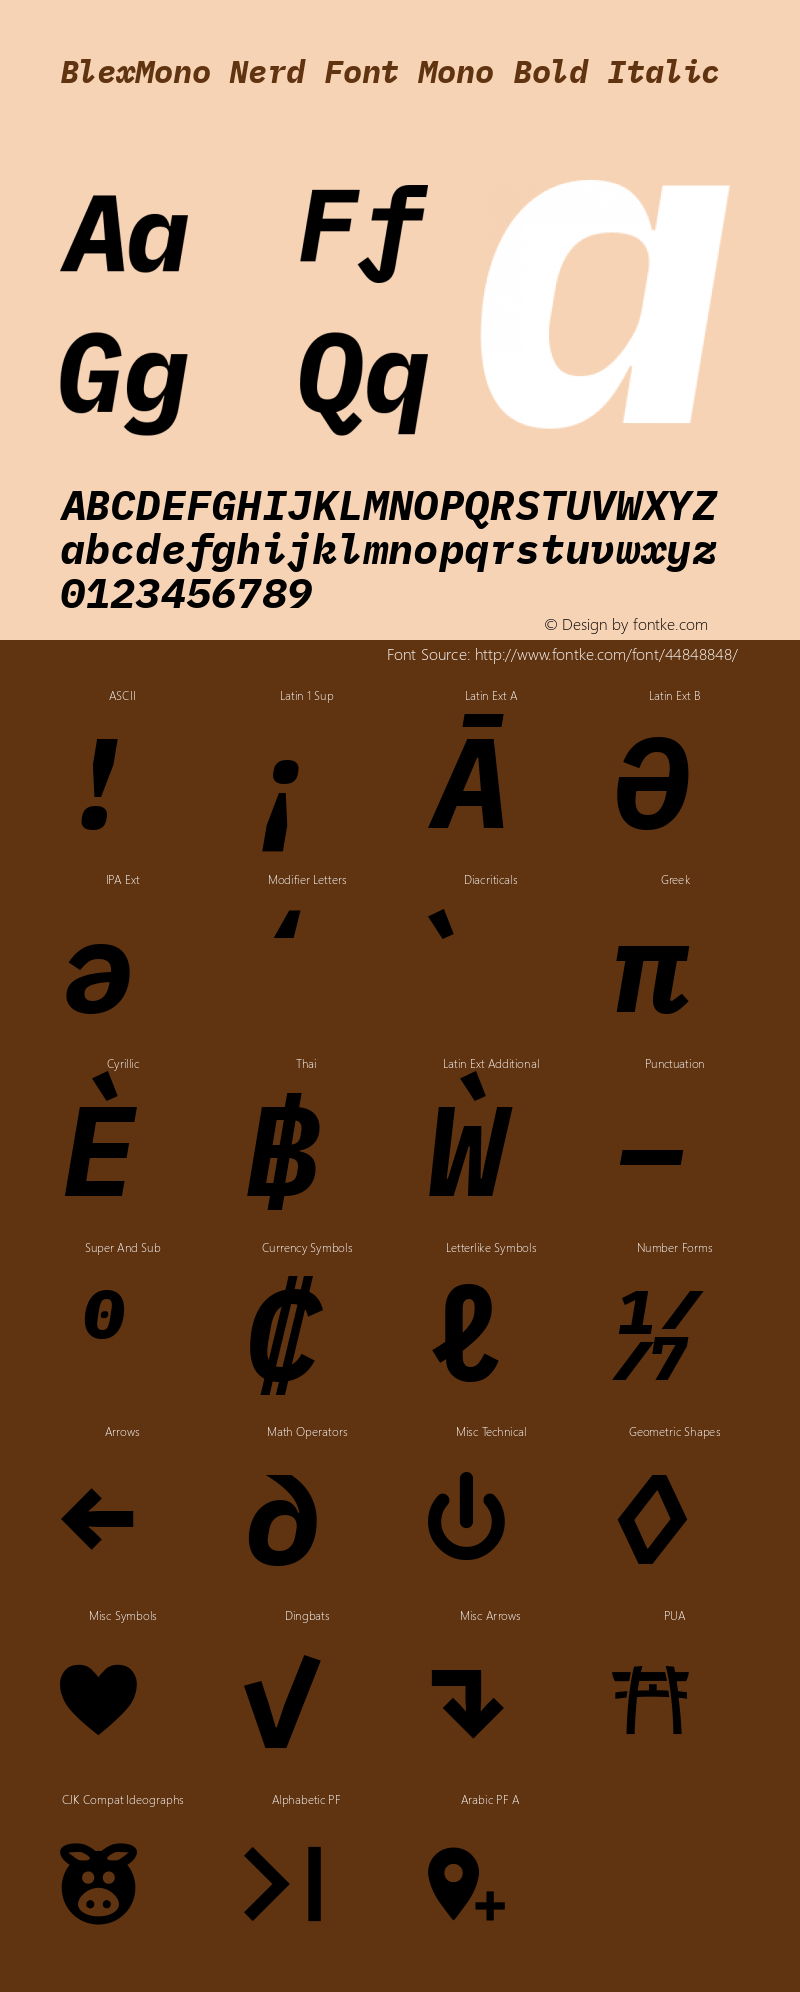 Blex Mono Bold Italic Nerd Font Complete Mono Version 2.000 Font Sample